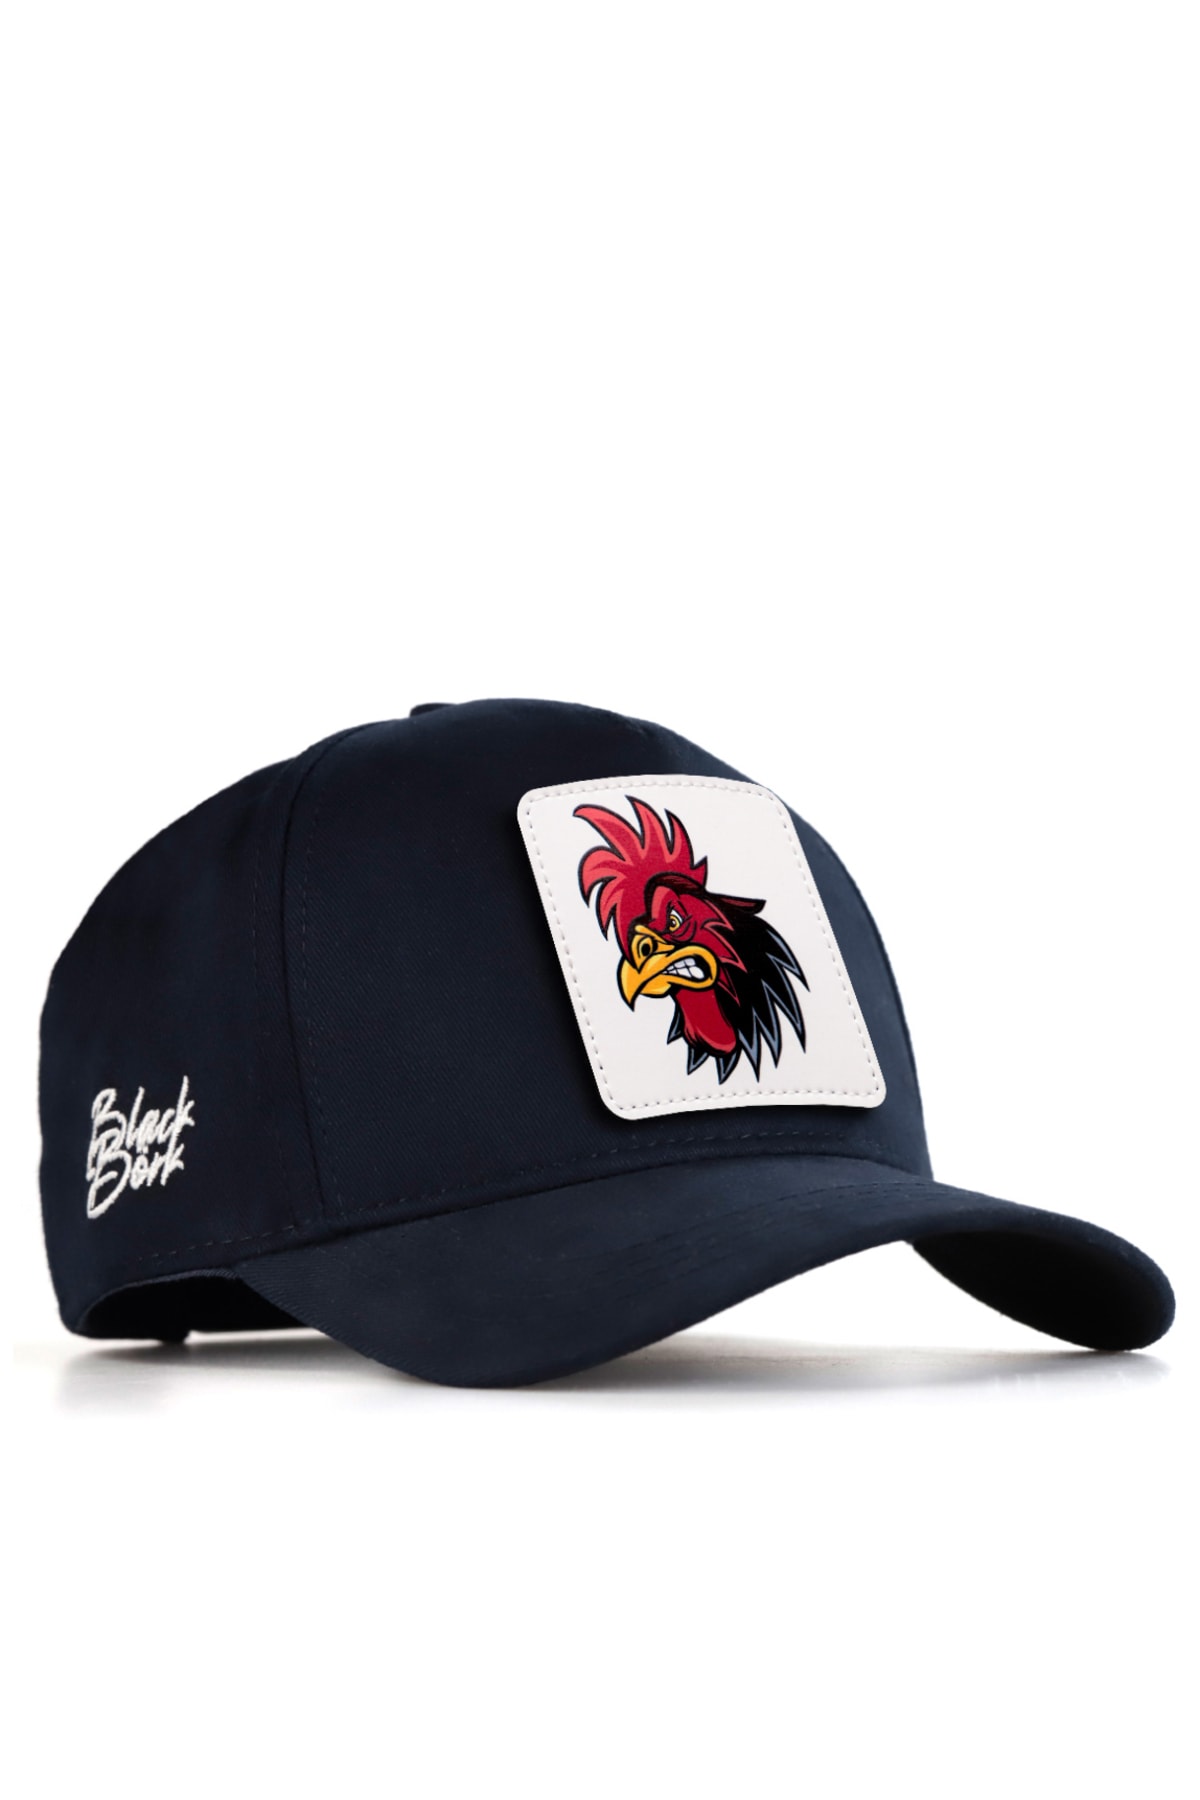 BlackBörk V1 Unisex Baseball Horoz3 Hayvan Logolu Lacivert Cap Şapka